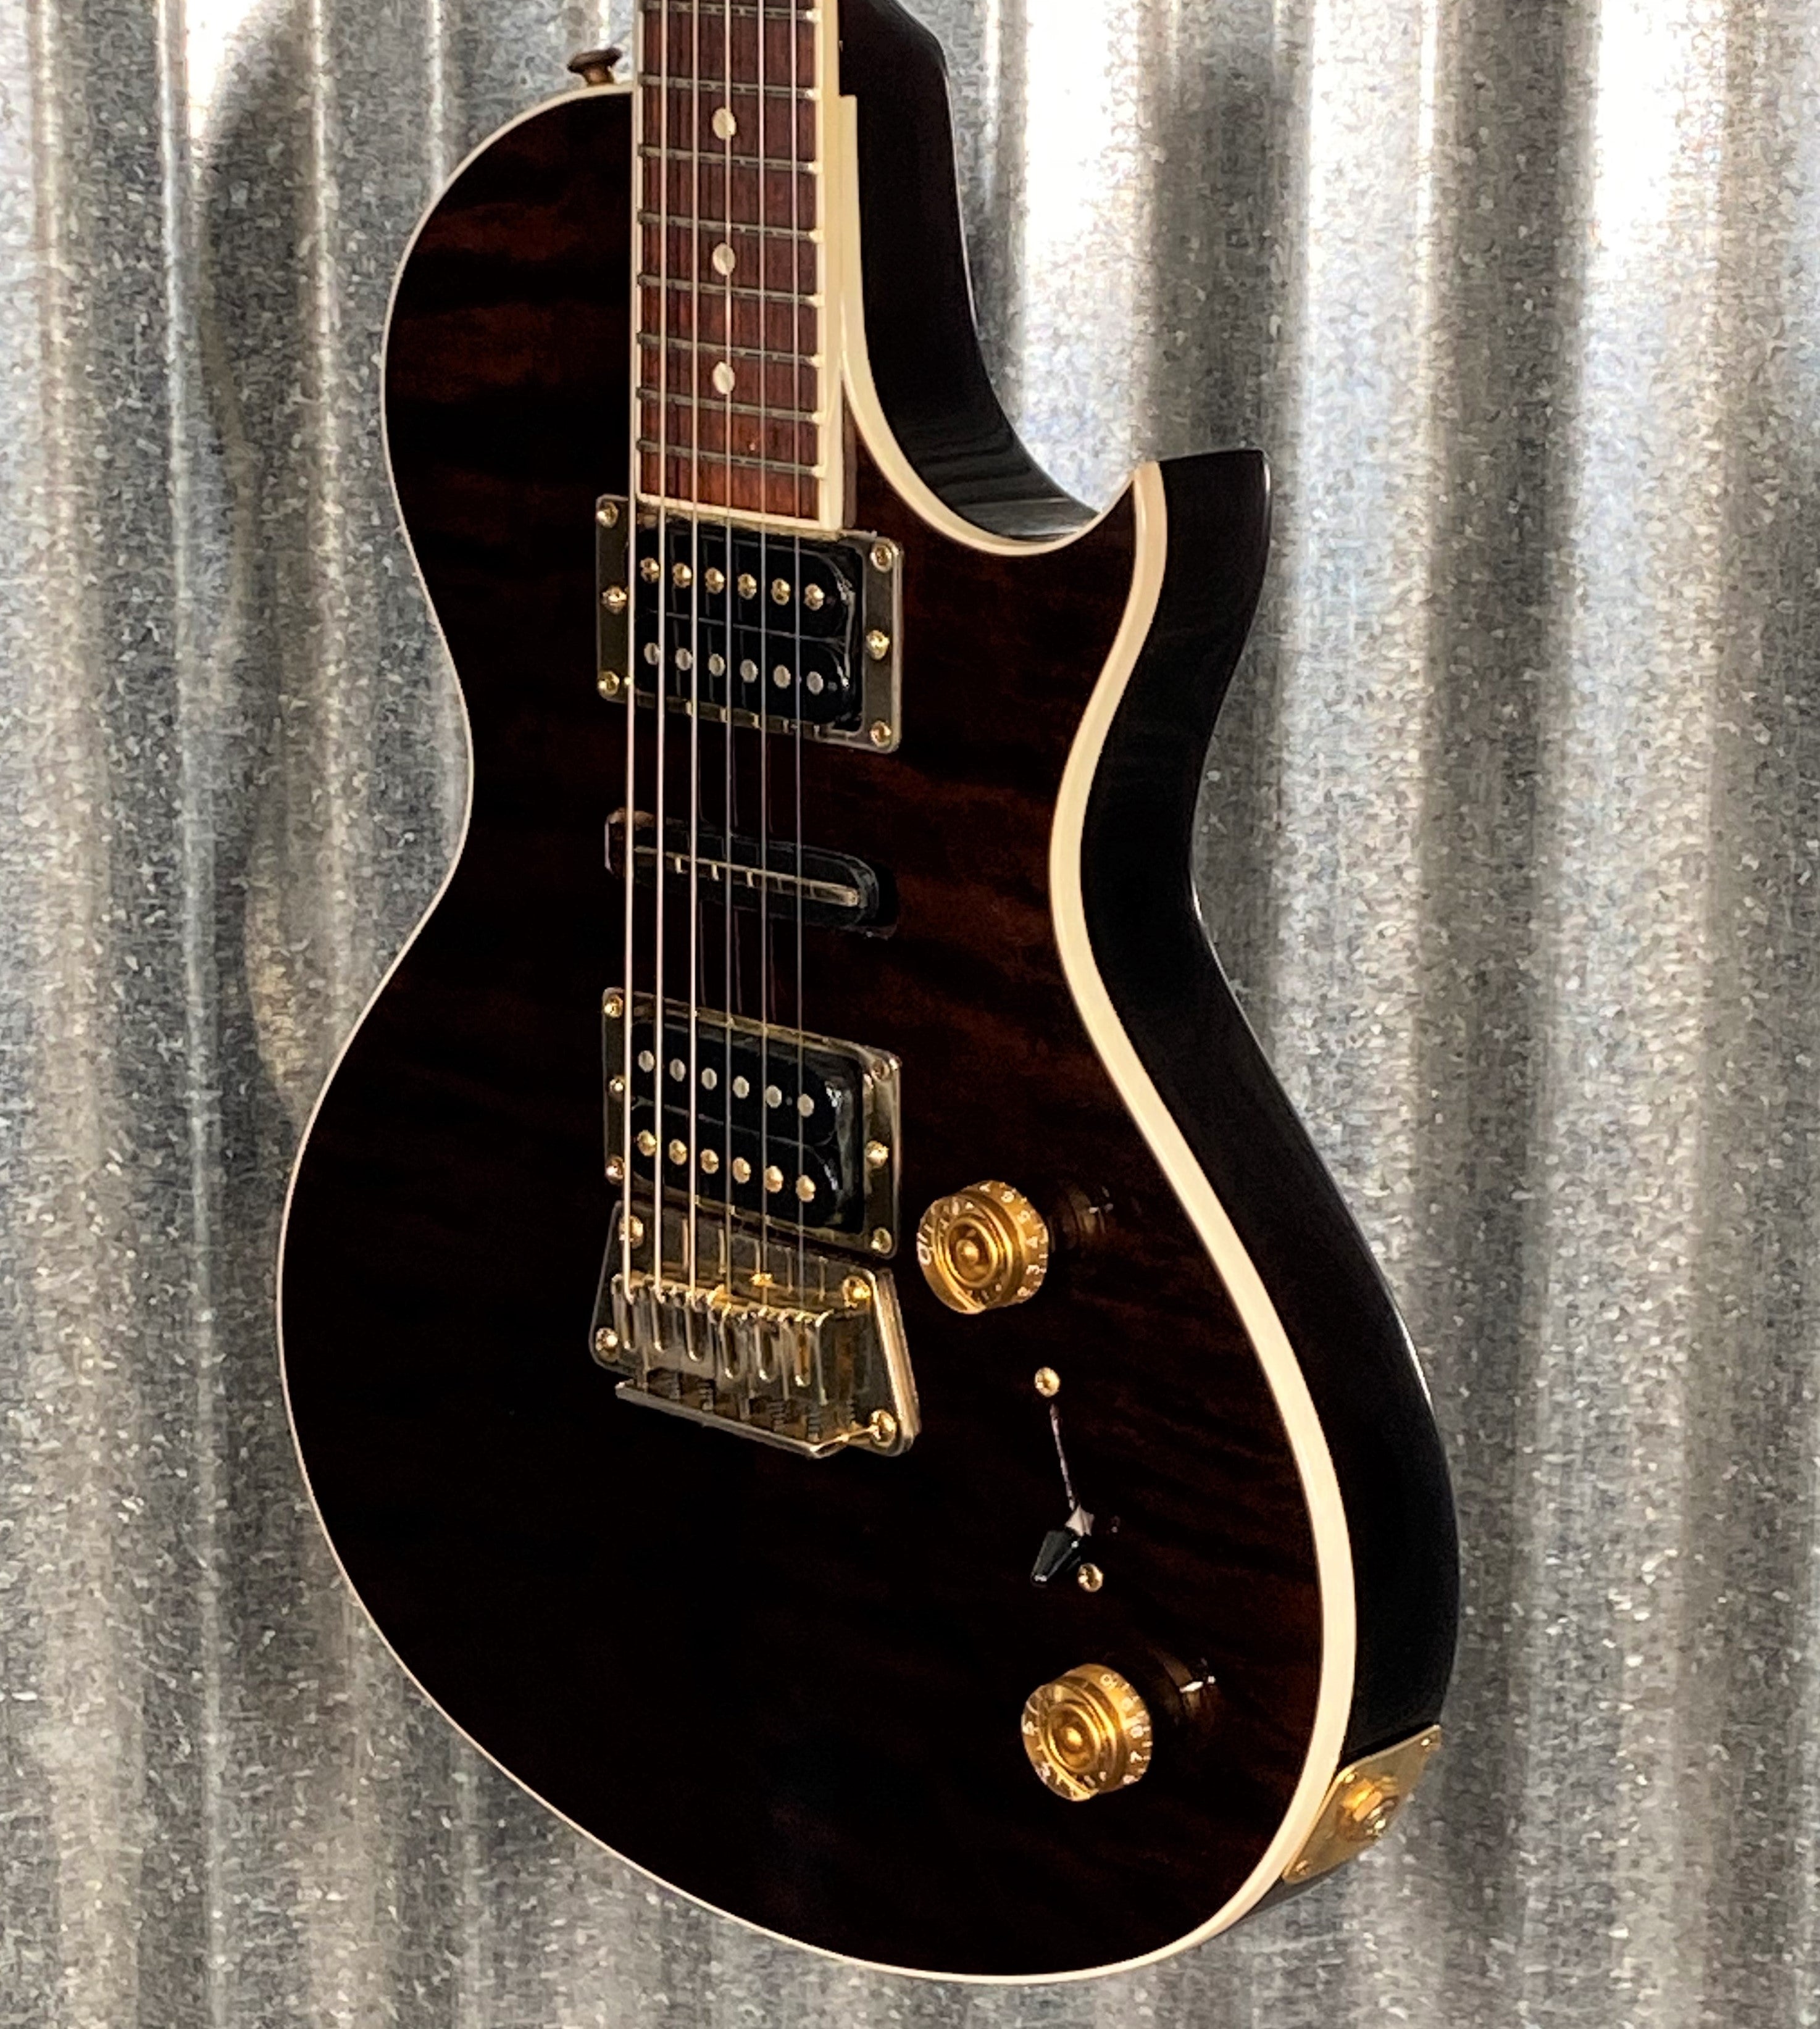 Gibson USA 2011 Nighthawk Standard Memphis Mojo Guitar & Bag #1376 Use